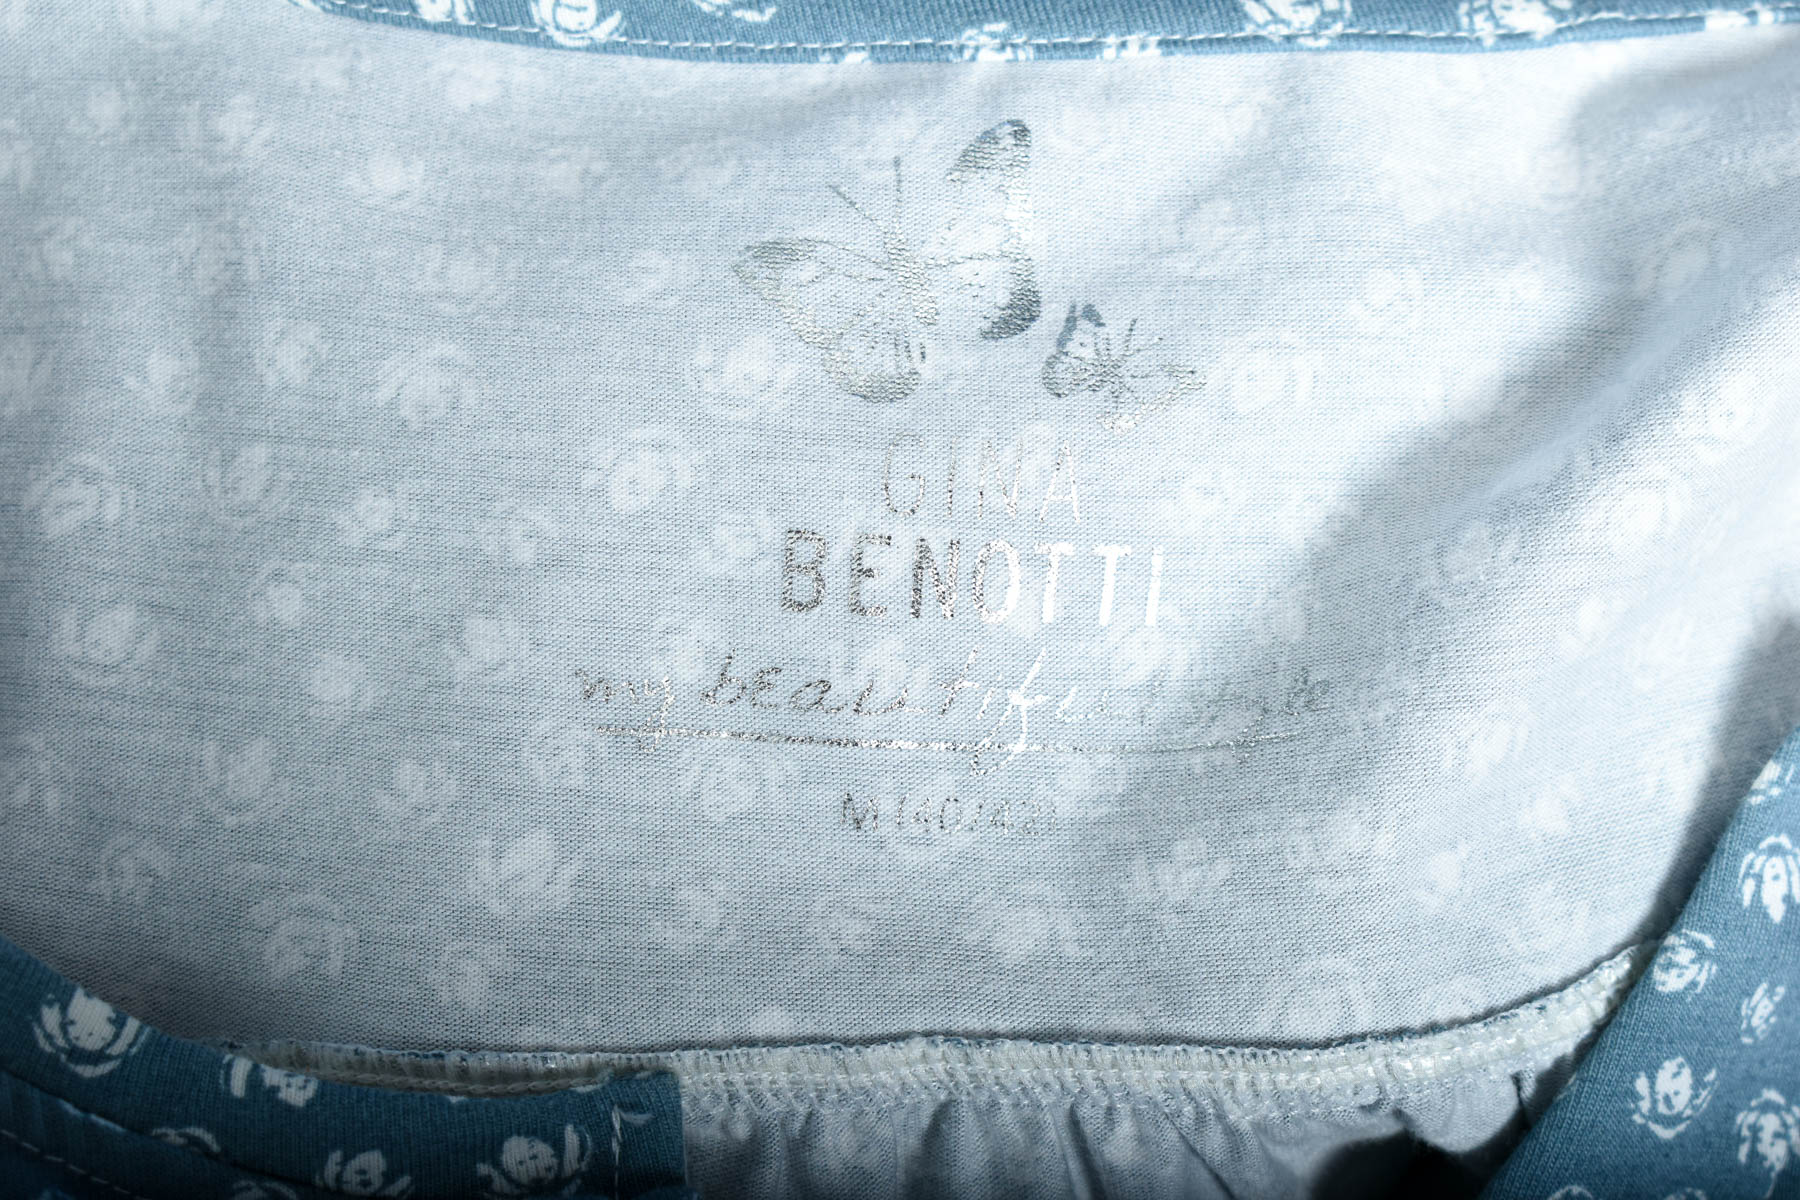 Bluza de damă - Gina Benotti - 2